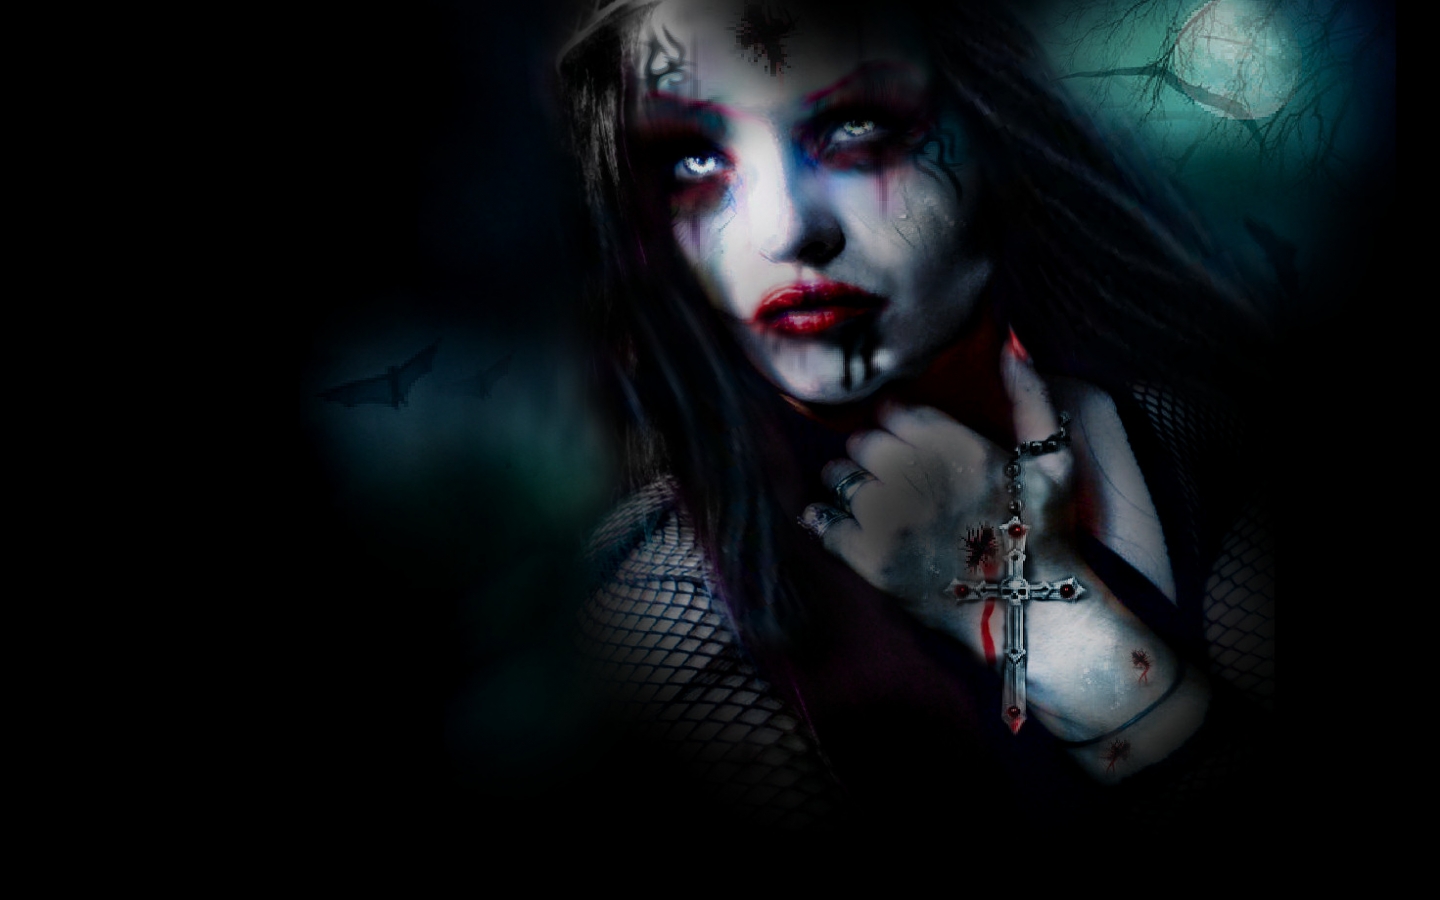 Dark Horror Gothic Vampire Fantasy Art Face Blood Wallpaper Background